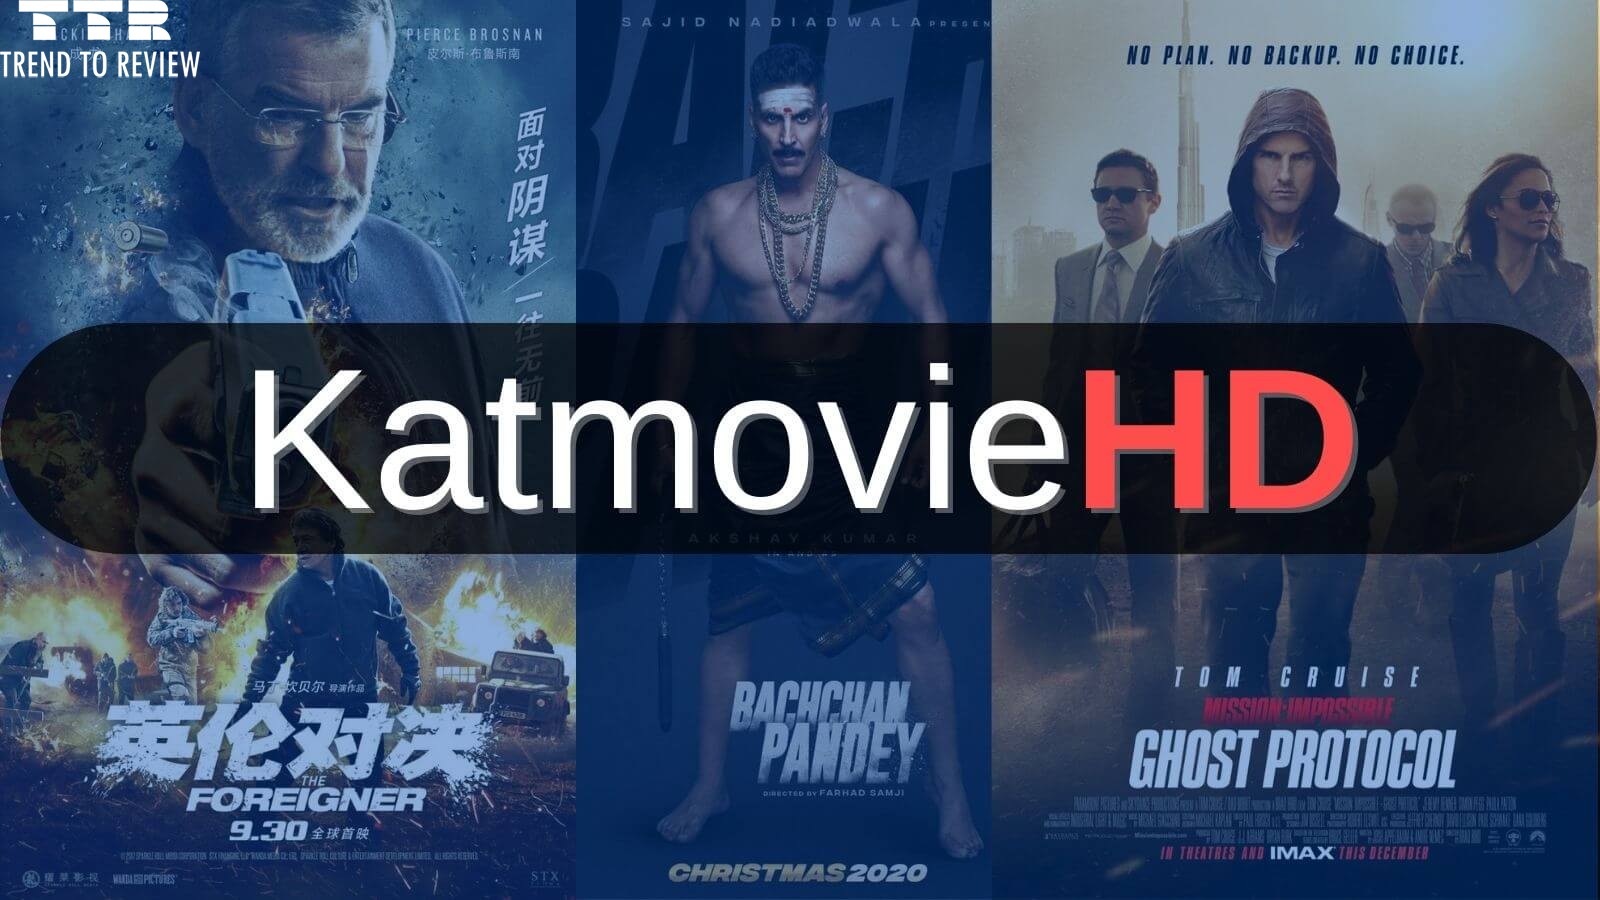 KatMovieHD 2021: Latest Movie Download Site Review